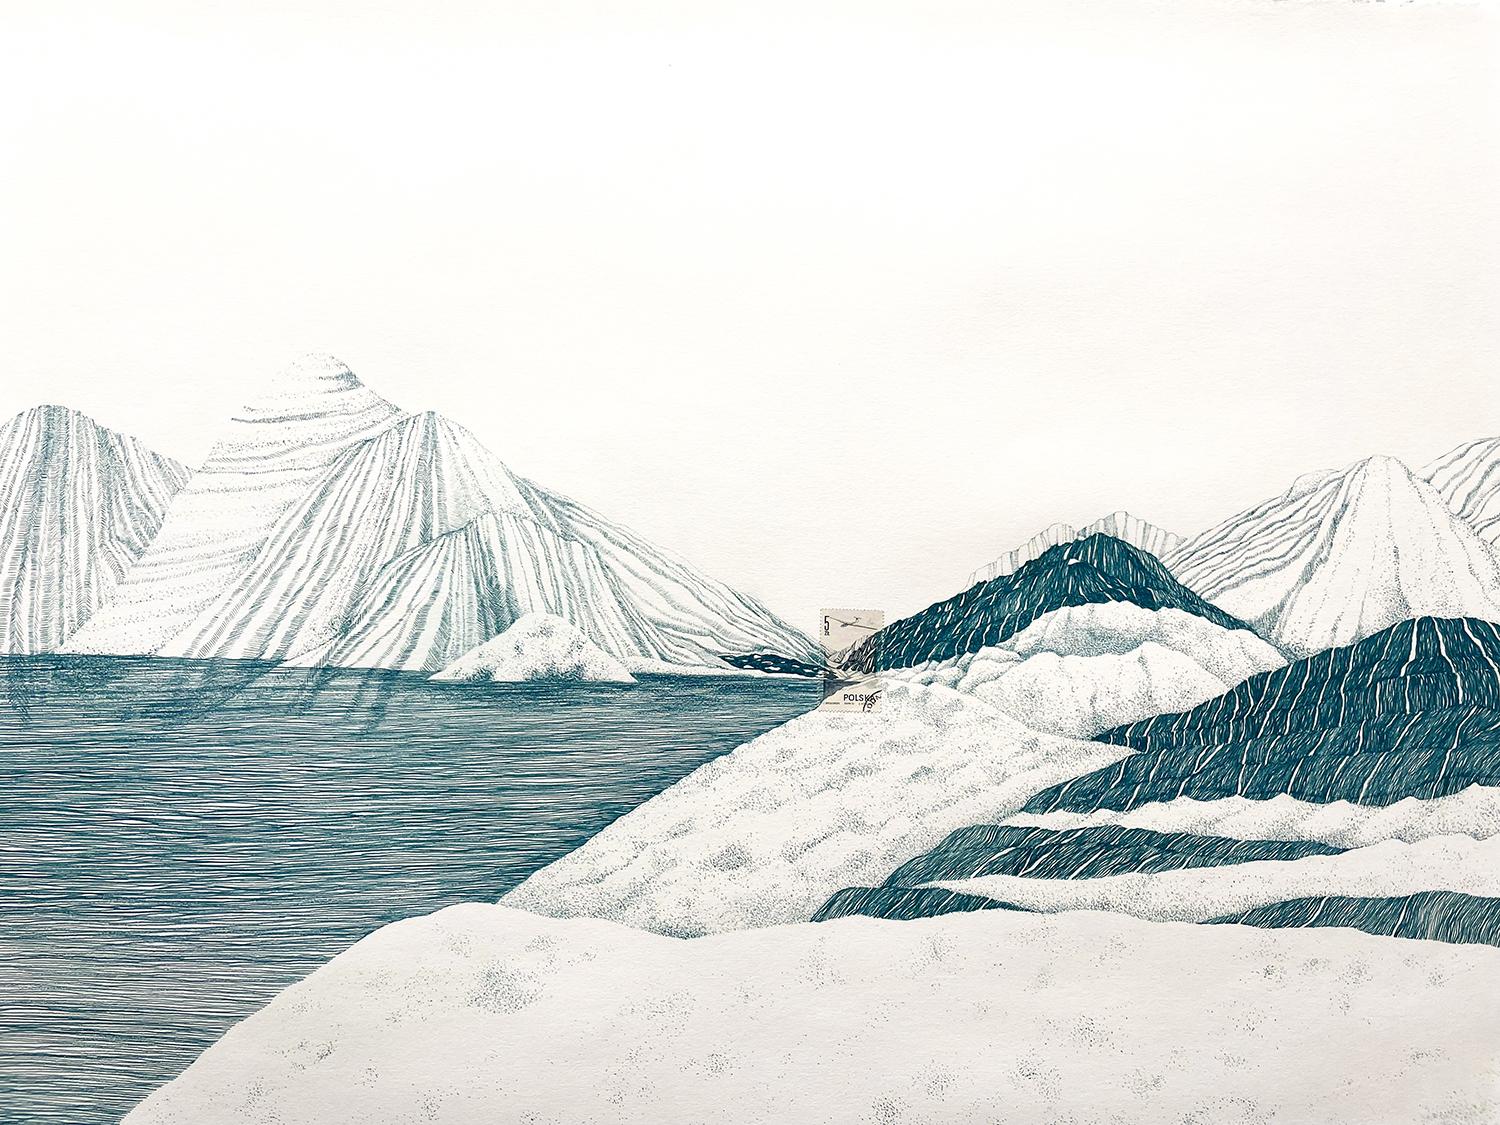 Poland (Glider) (Illustration of Glacial Landscape Around Vintage Stamp, Pencil) - Mixed Media Art by Andrea Moreau